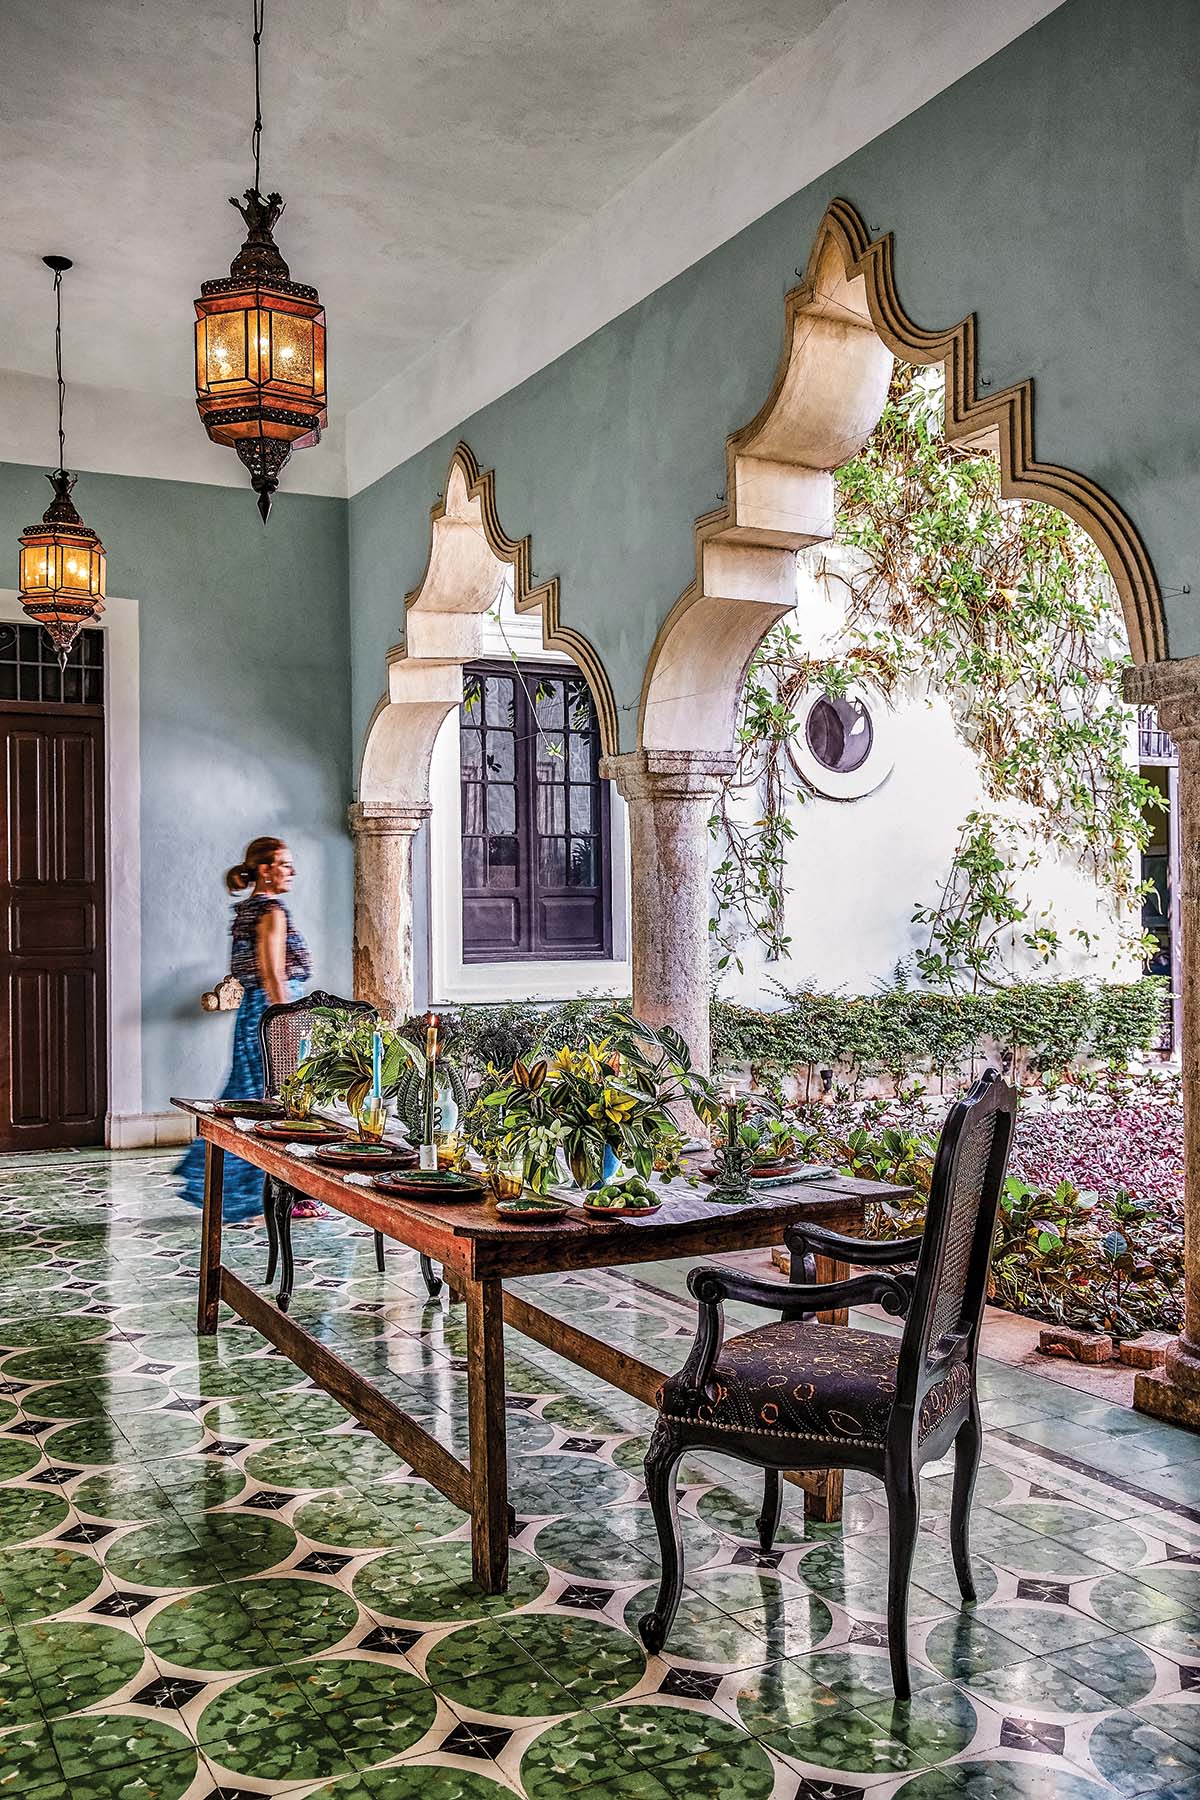 Ariella Chezar walks around a floral table in a Moroccan-inspired room.